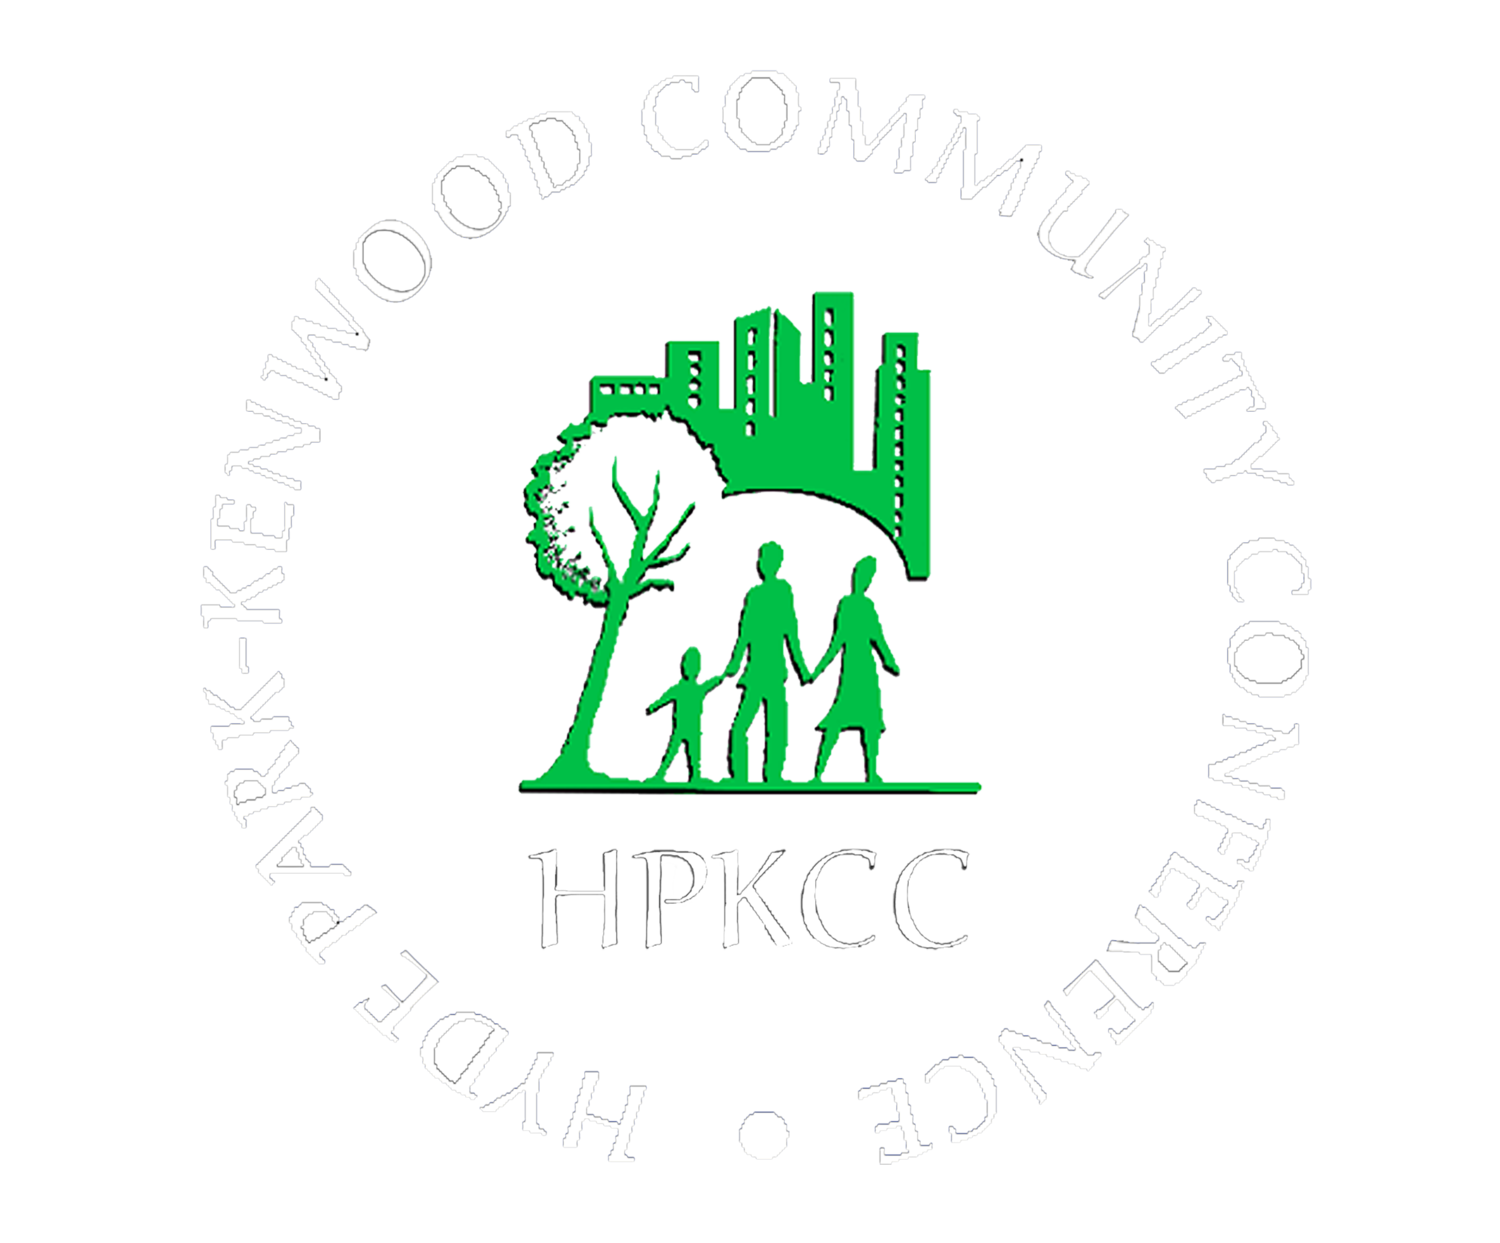 Hyde Park-Kenwood Community Conference